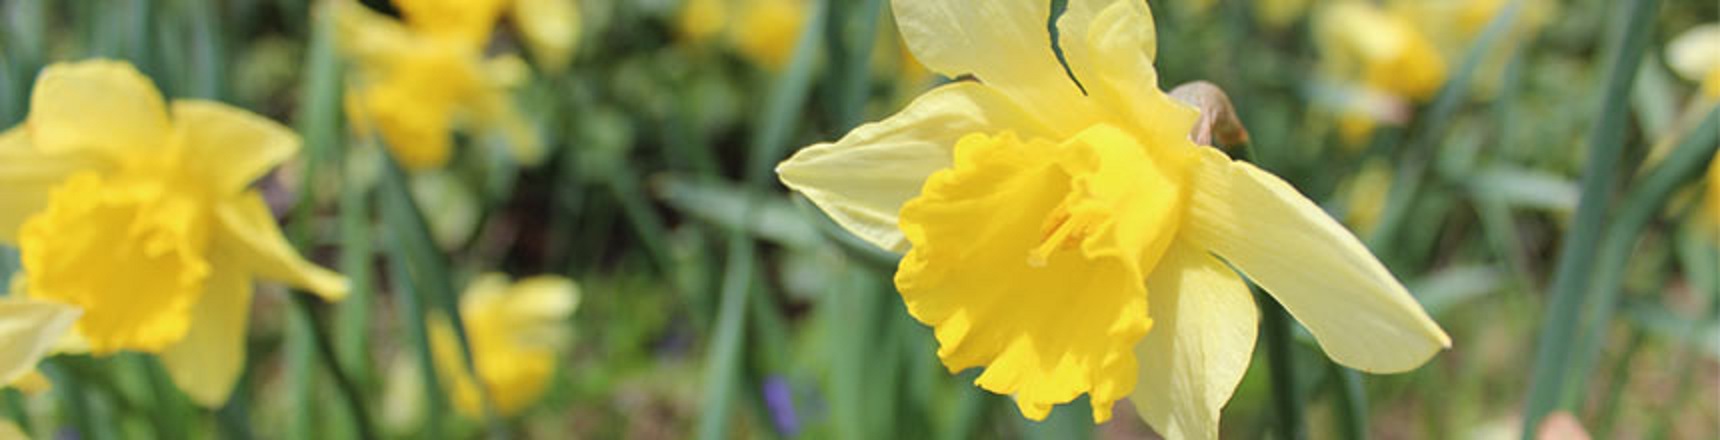 closeup image of daffodil flowers